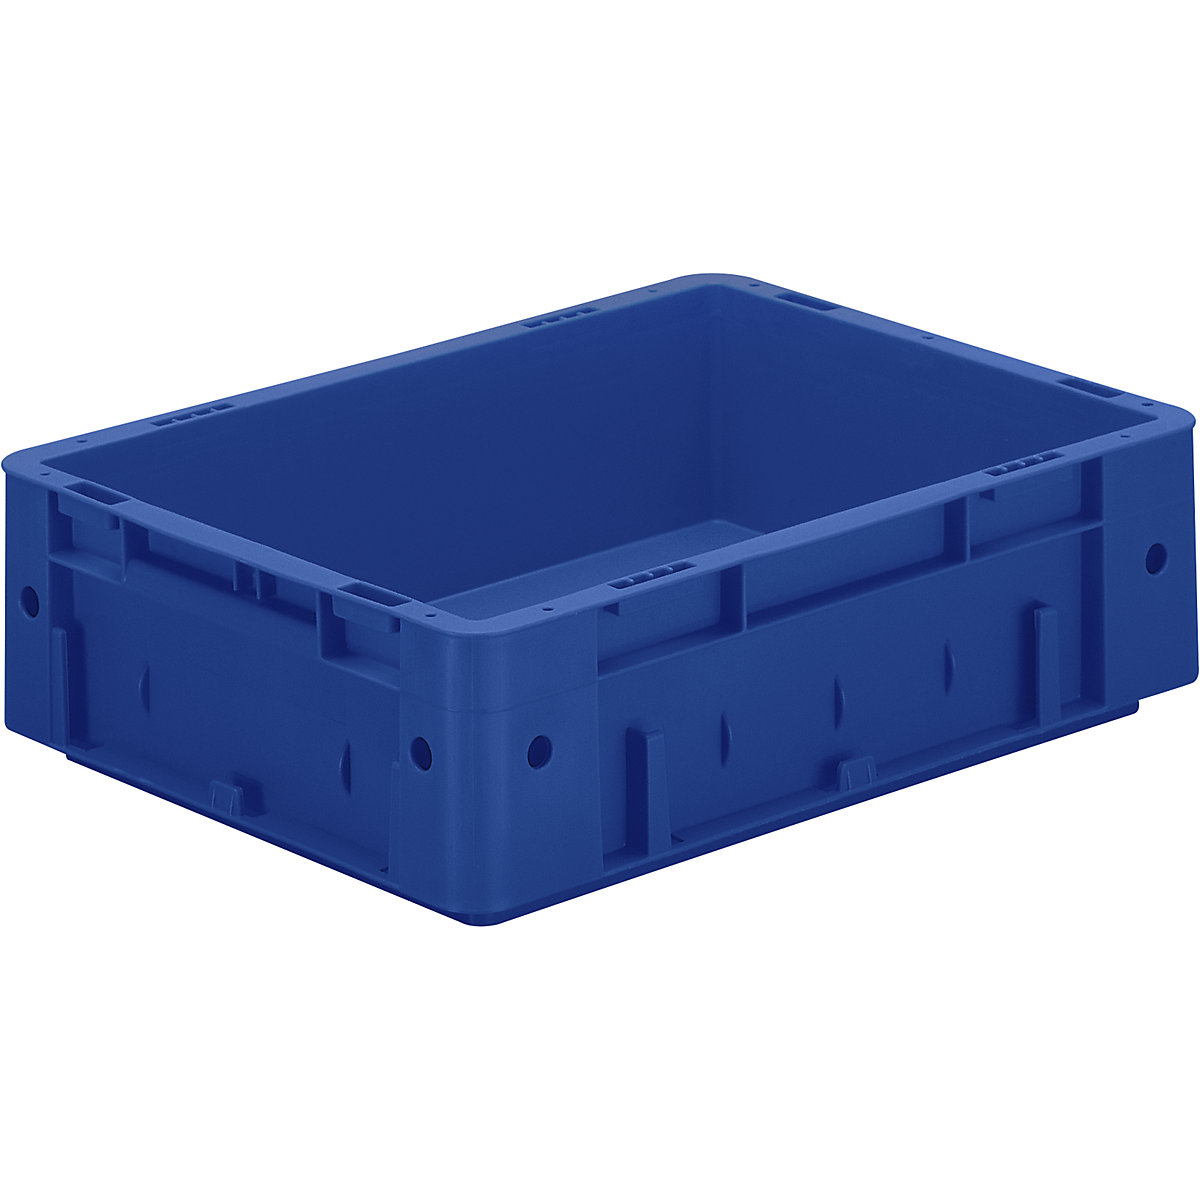 Schwerlast-Euro-Behälter, Polypropylen, Volumen 9,2 l, LxBxH 400 x 300 x 120 mm, Wände geschlossen, Boden geschlossen, blau, VE 4 Stk-5